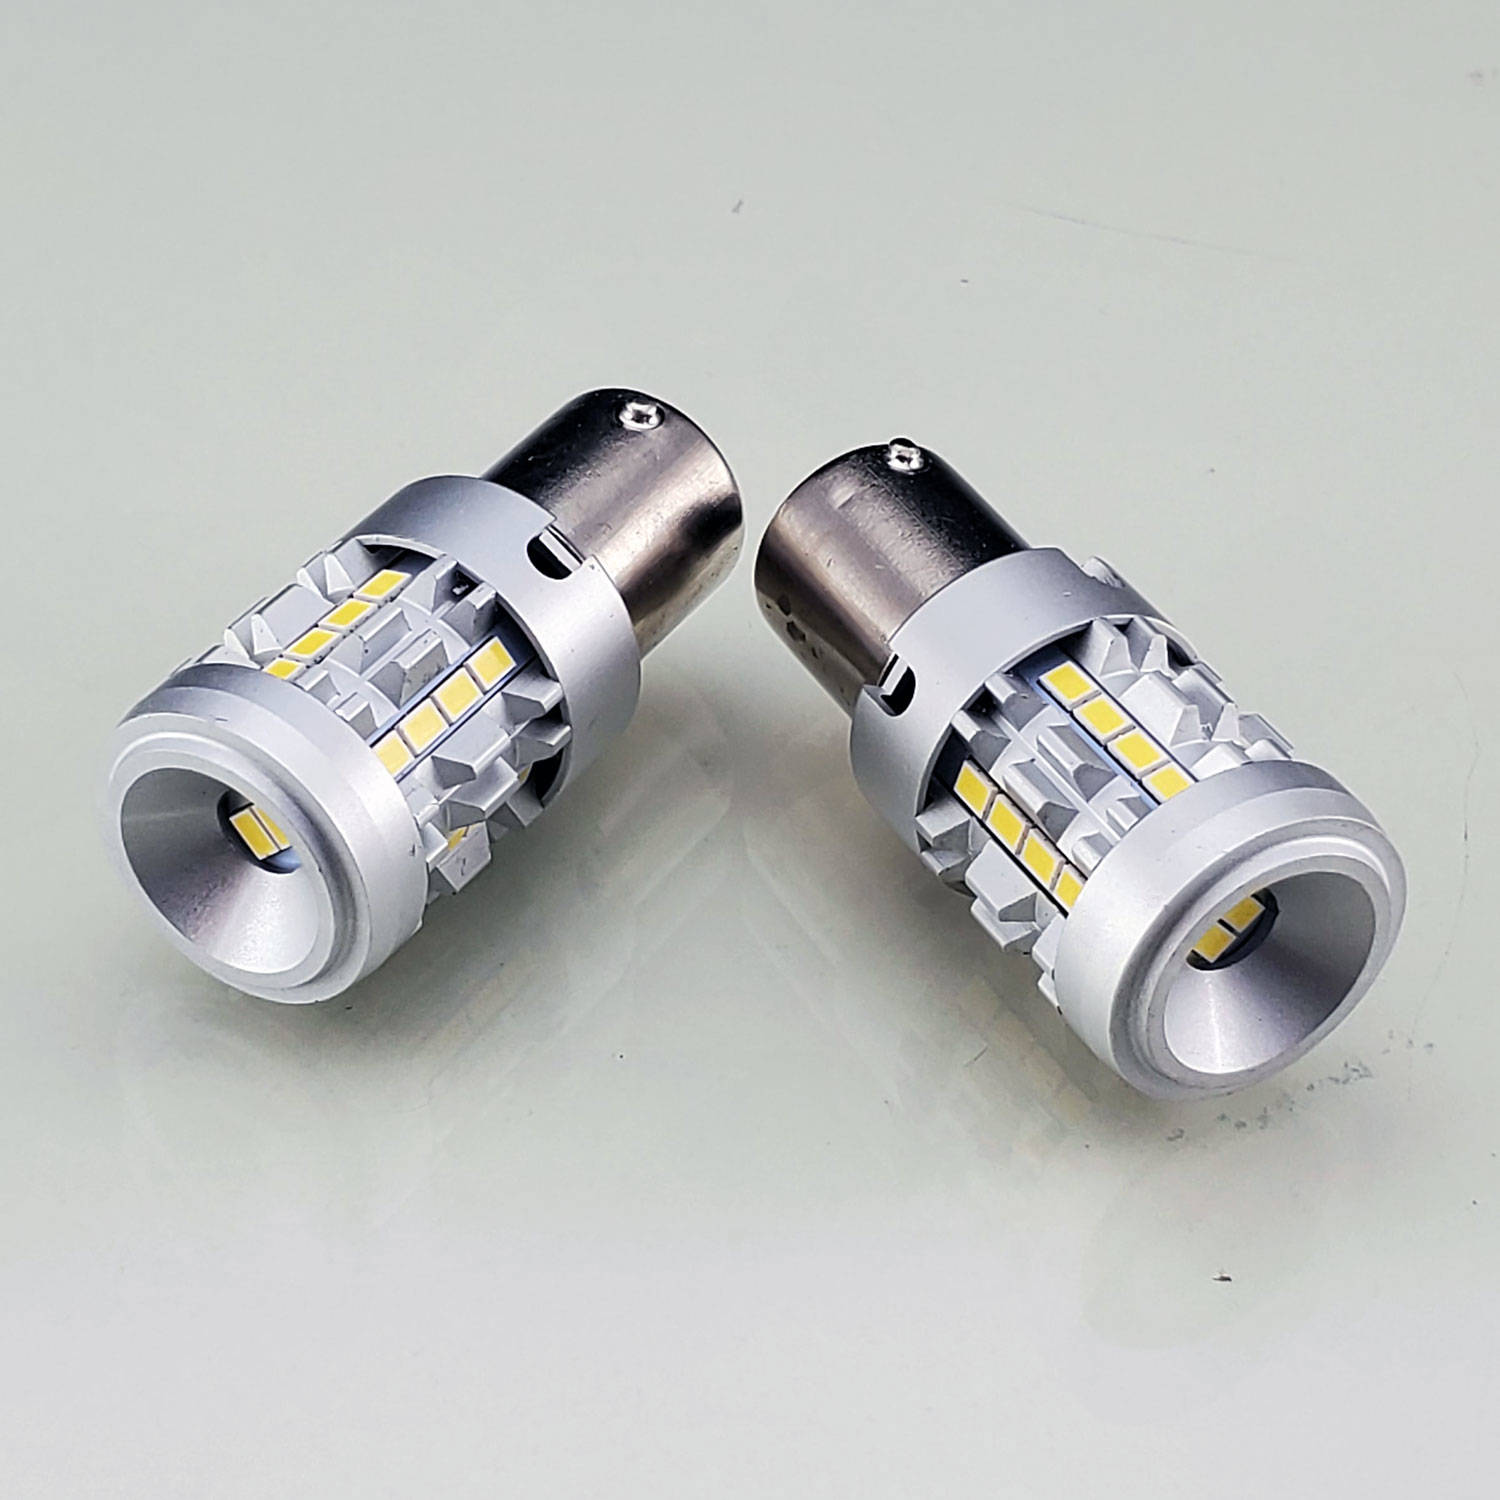 382 Twenty20 Impact LED Bulbs: P21W CANBus Compatible LED bulbs